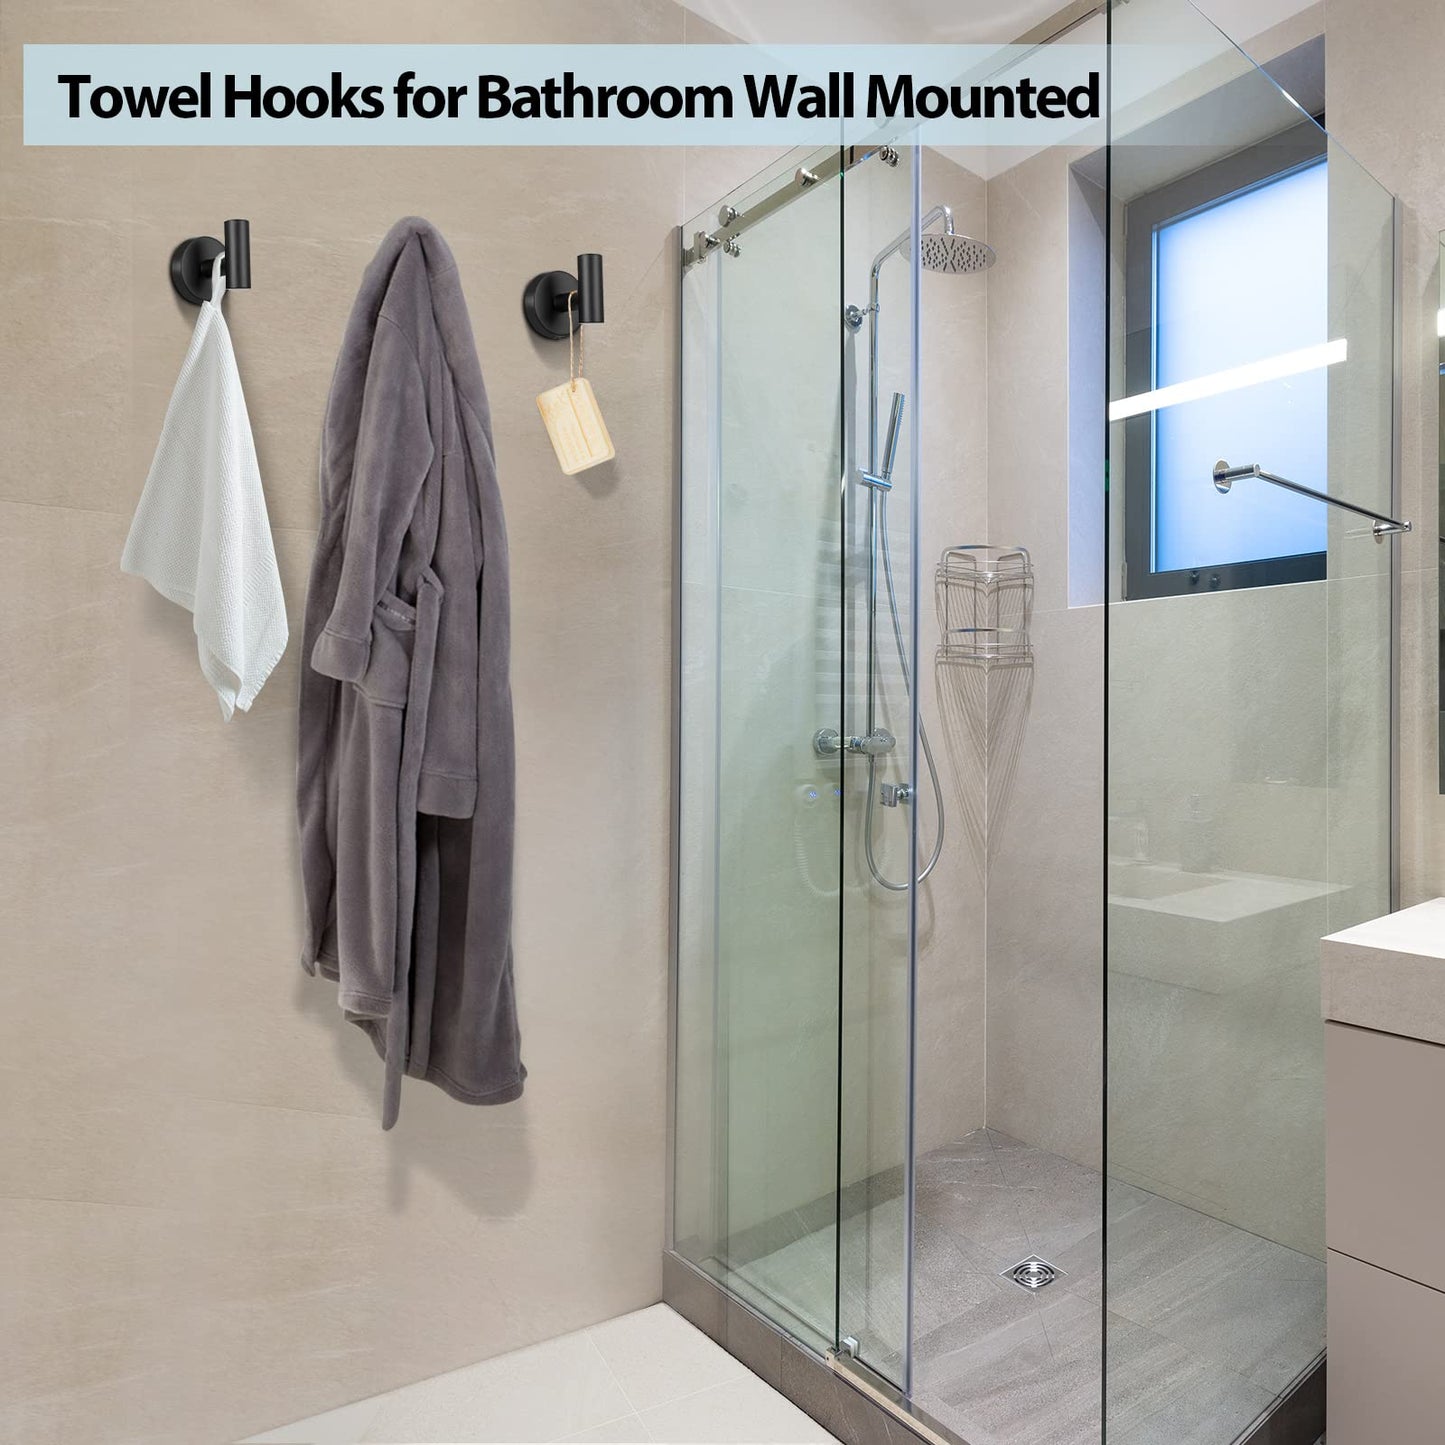 2 Pcs Wall Mount Bathroom Towel Hooks Holder